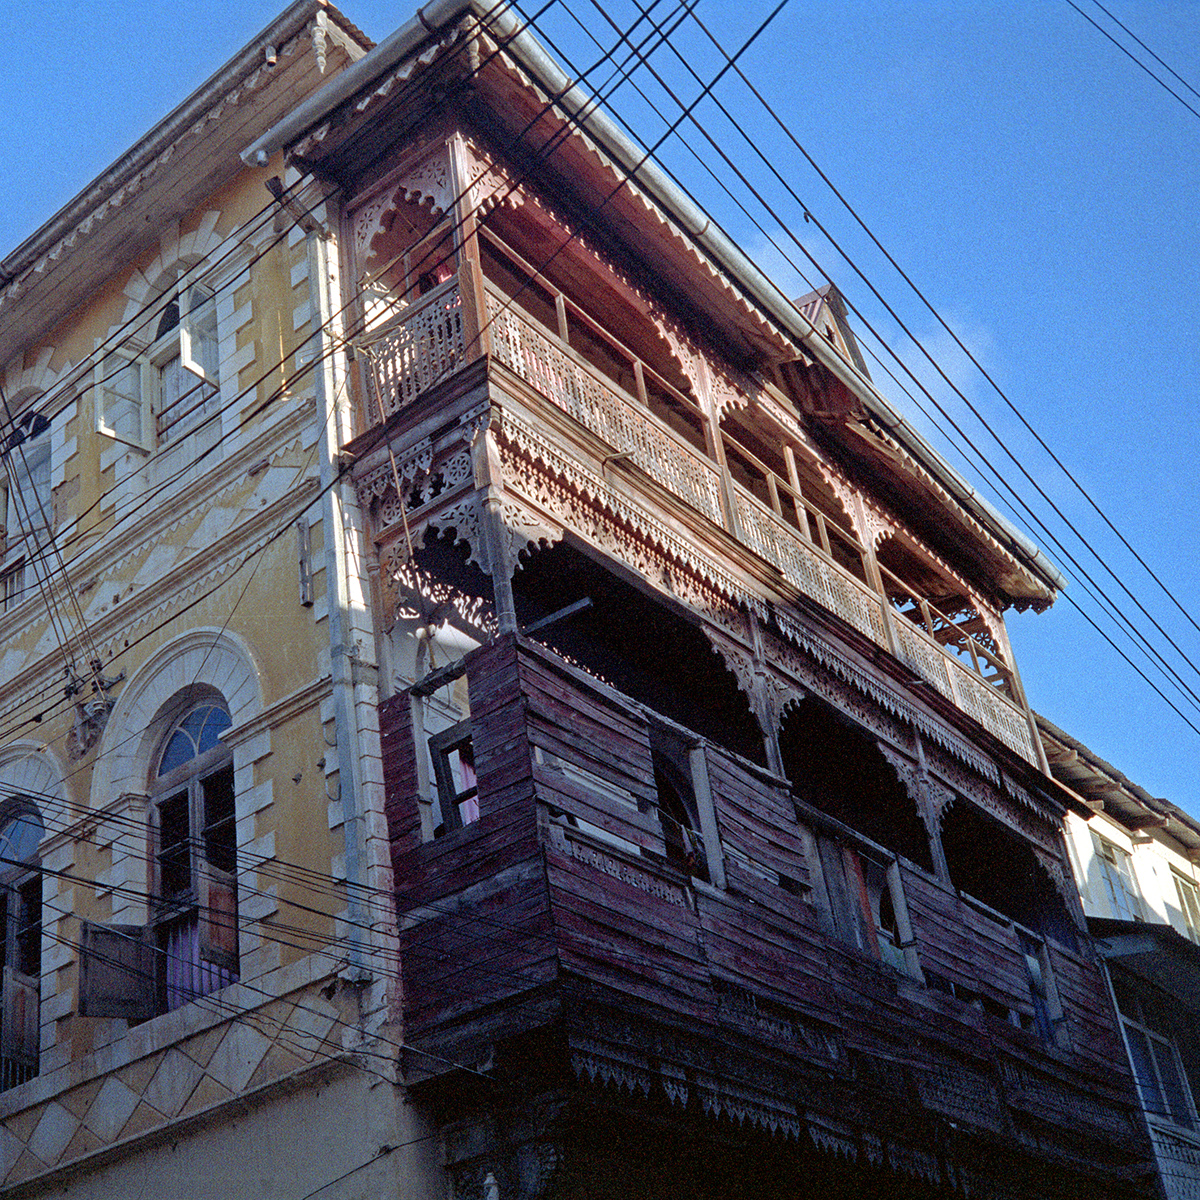 Mombassa architectural example